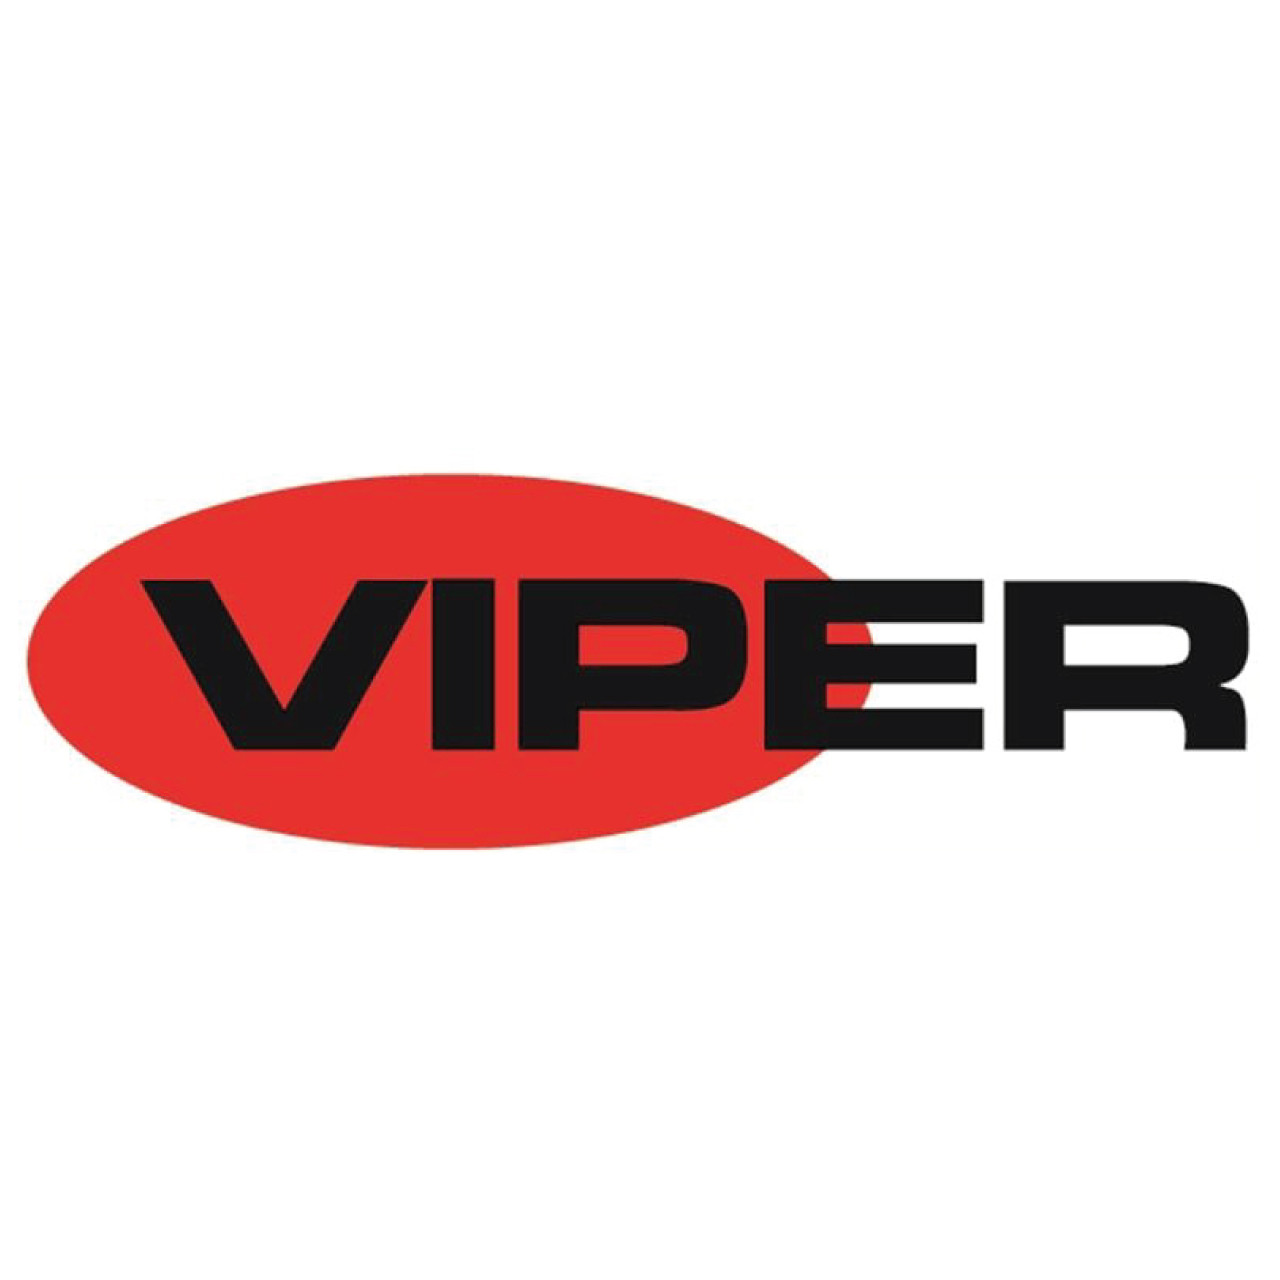 VIPER EQUIPMENT PART # 4587000210 HOPPER BUFFER PNEUM VIB D450 PICTURE